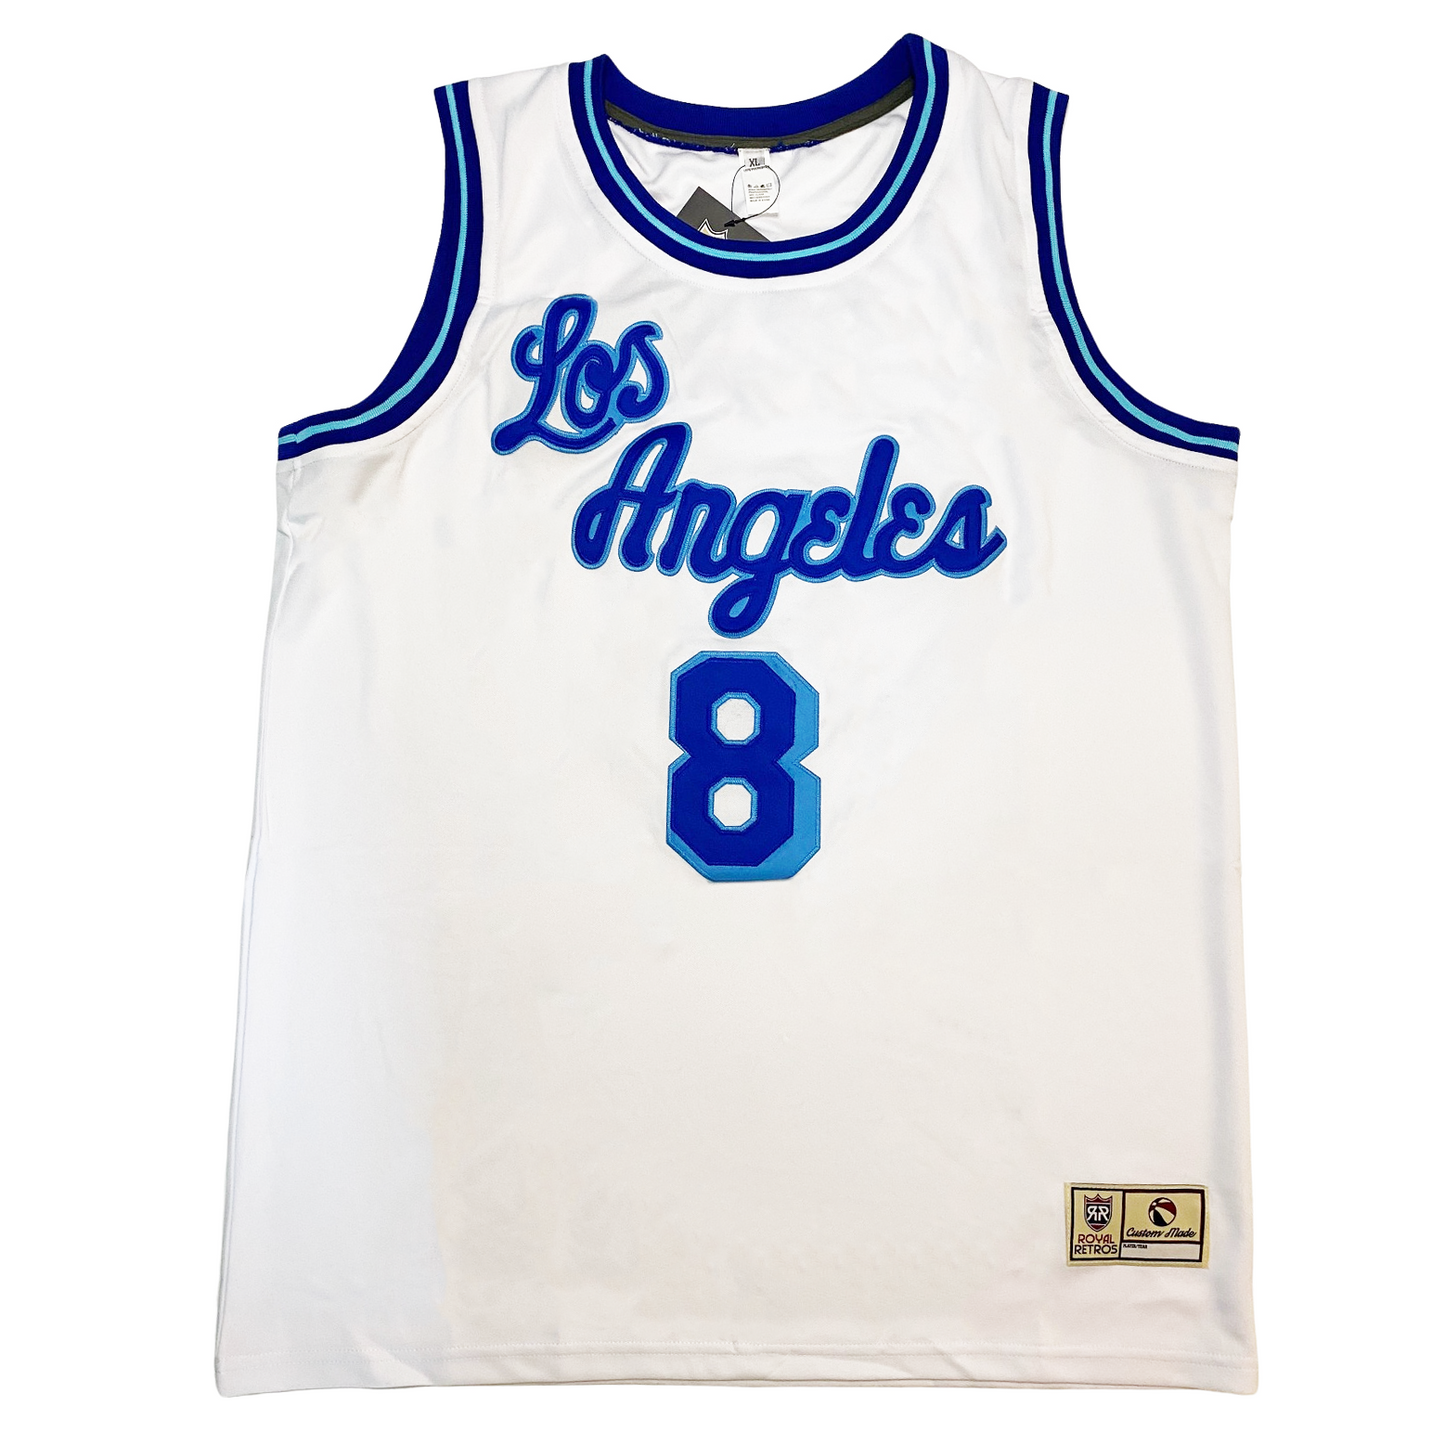 NBA Jerseys for sale in Los Angeles, California